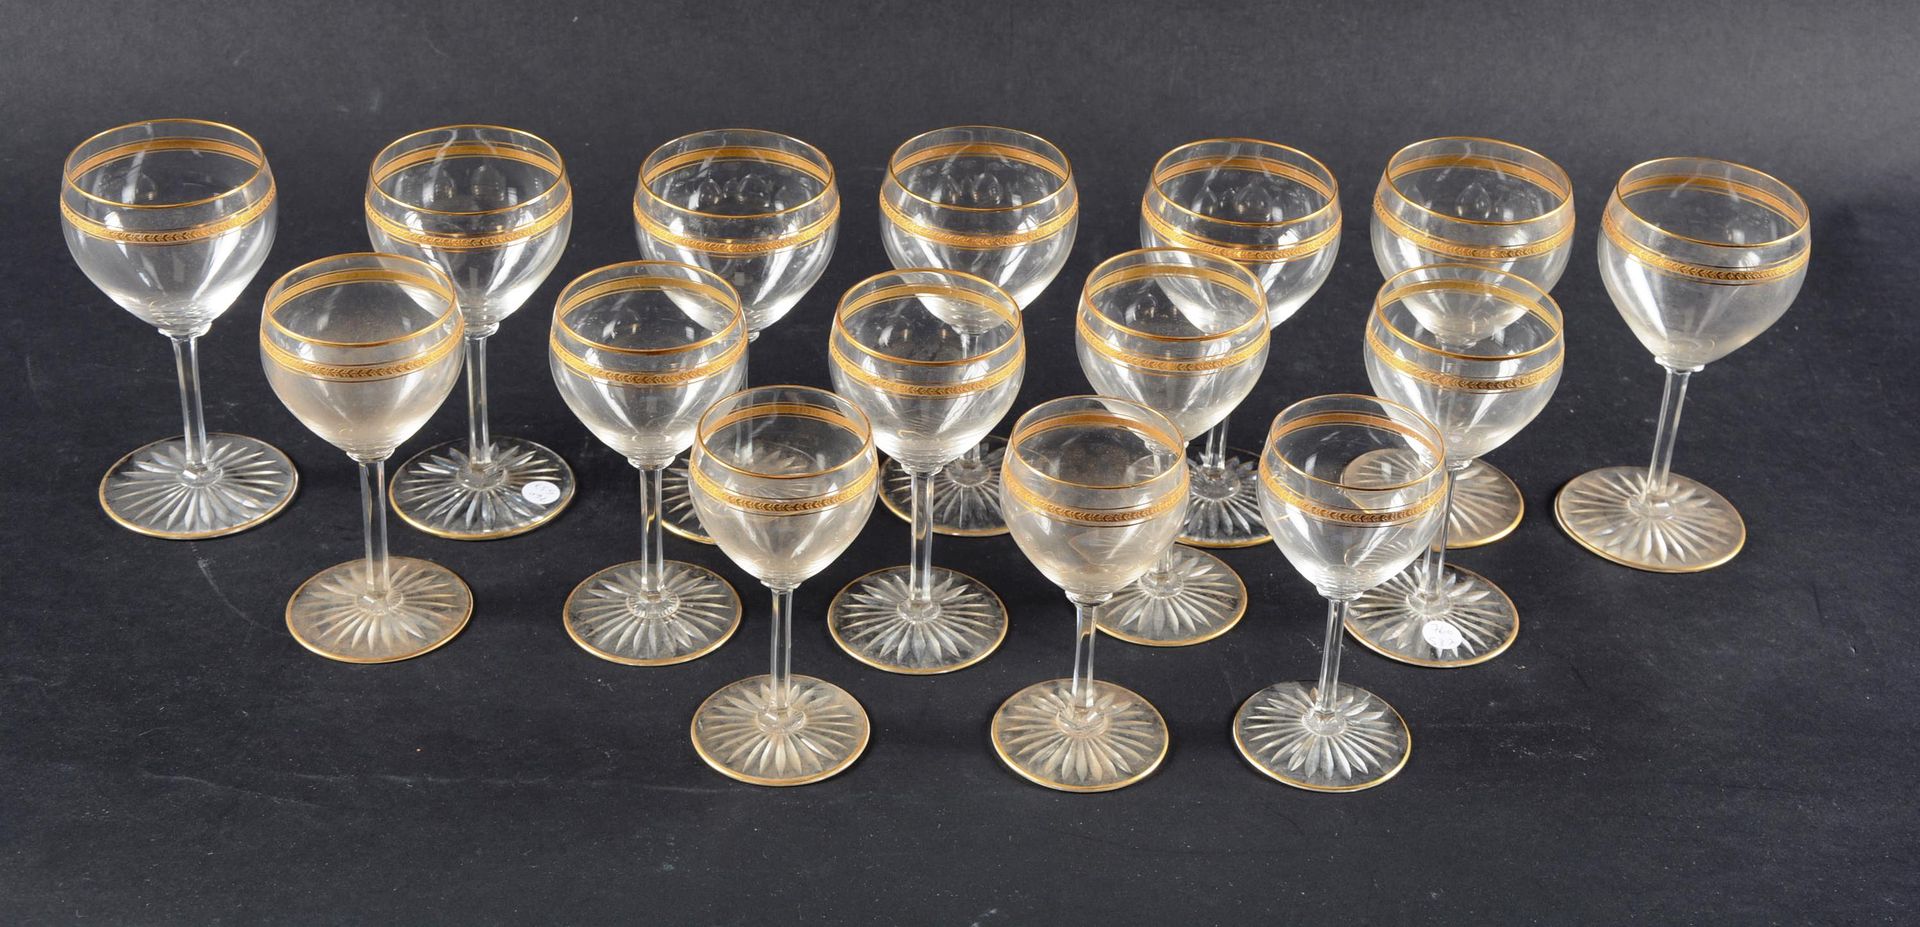 Suite de verres 带镀金的古董水晶杯套装，7只大杯，4只中杯和3只小杯